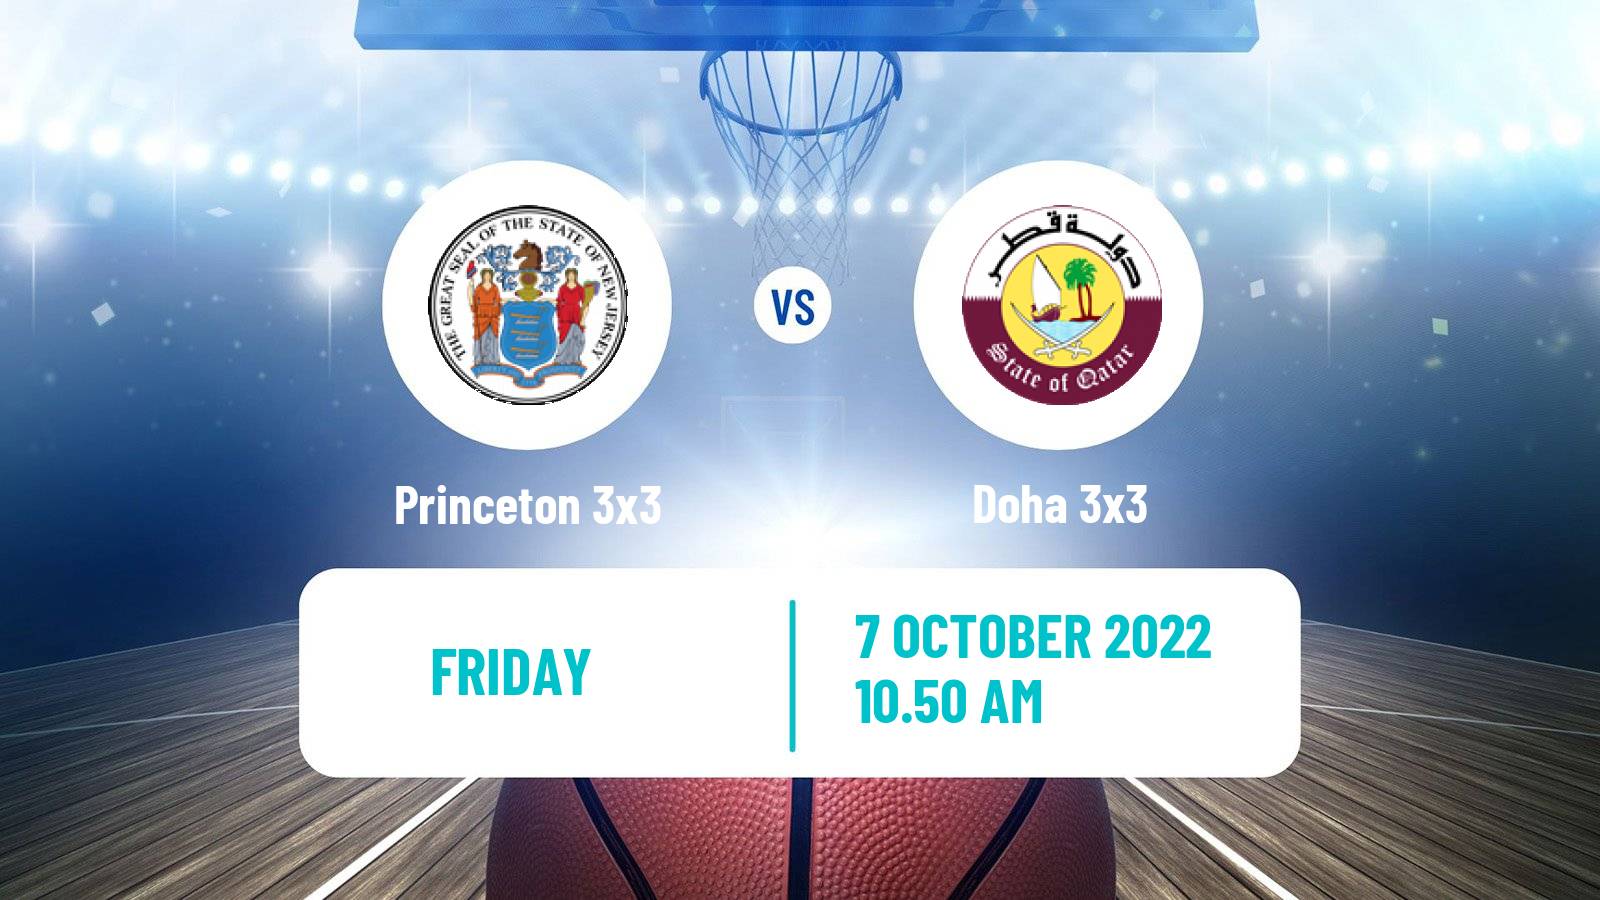 Basketball World Tour Paris 3x3 Princeton 3x3 - Doha 3x3